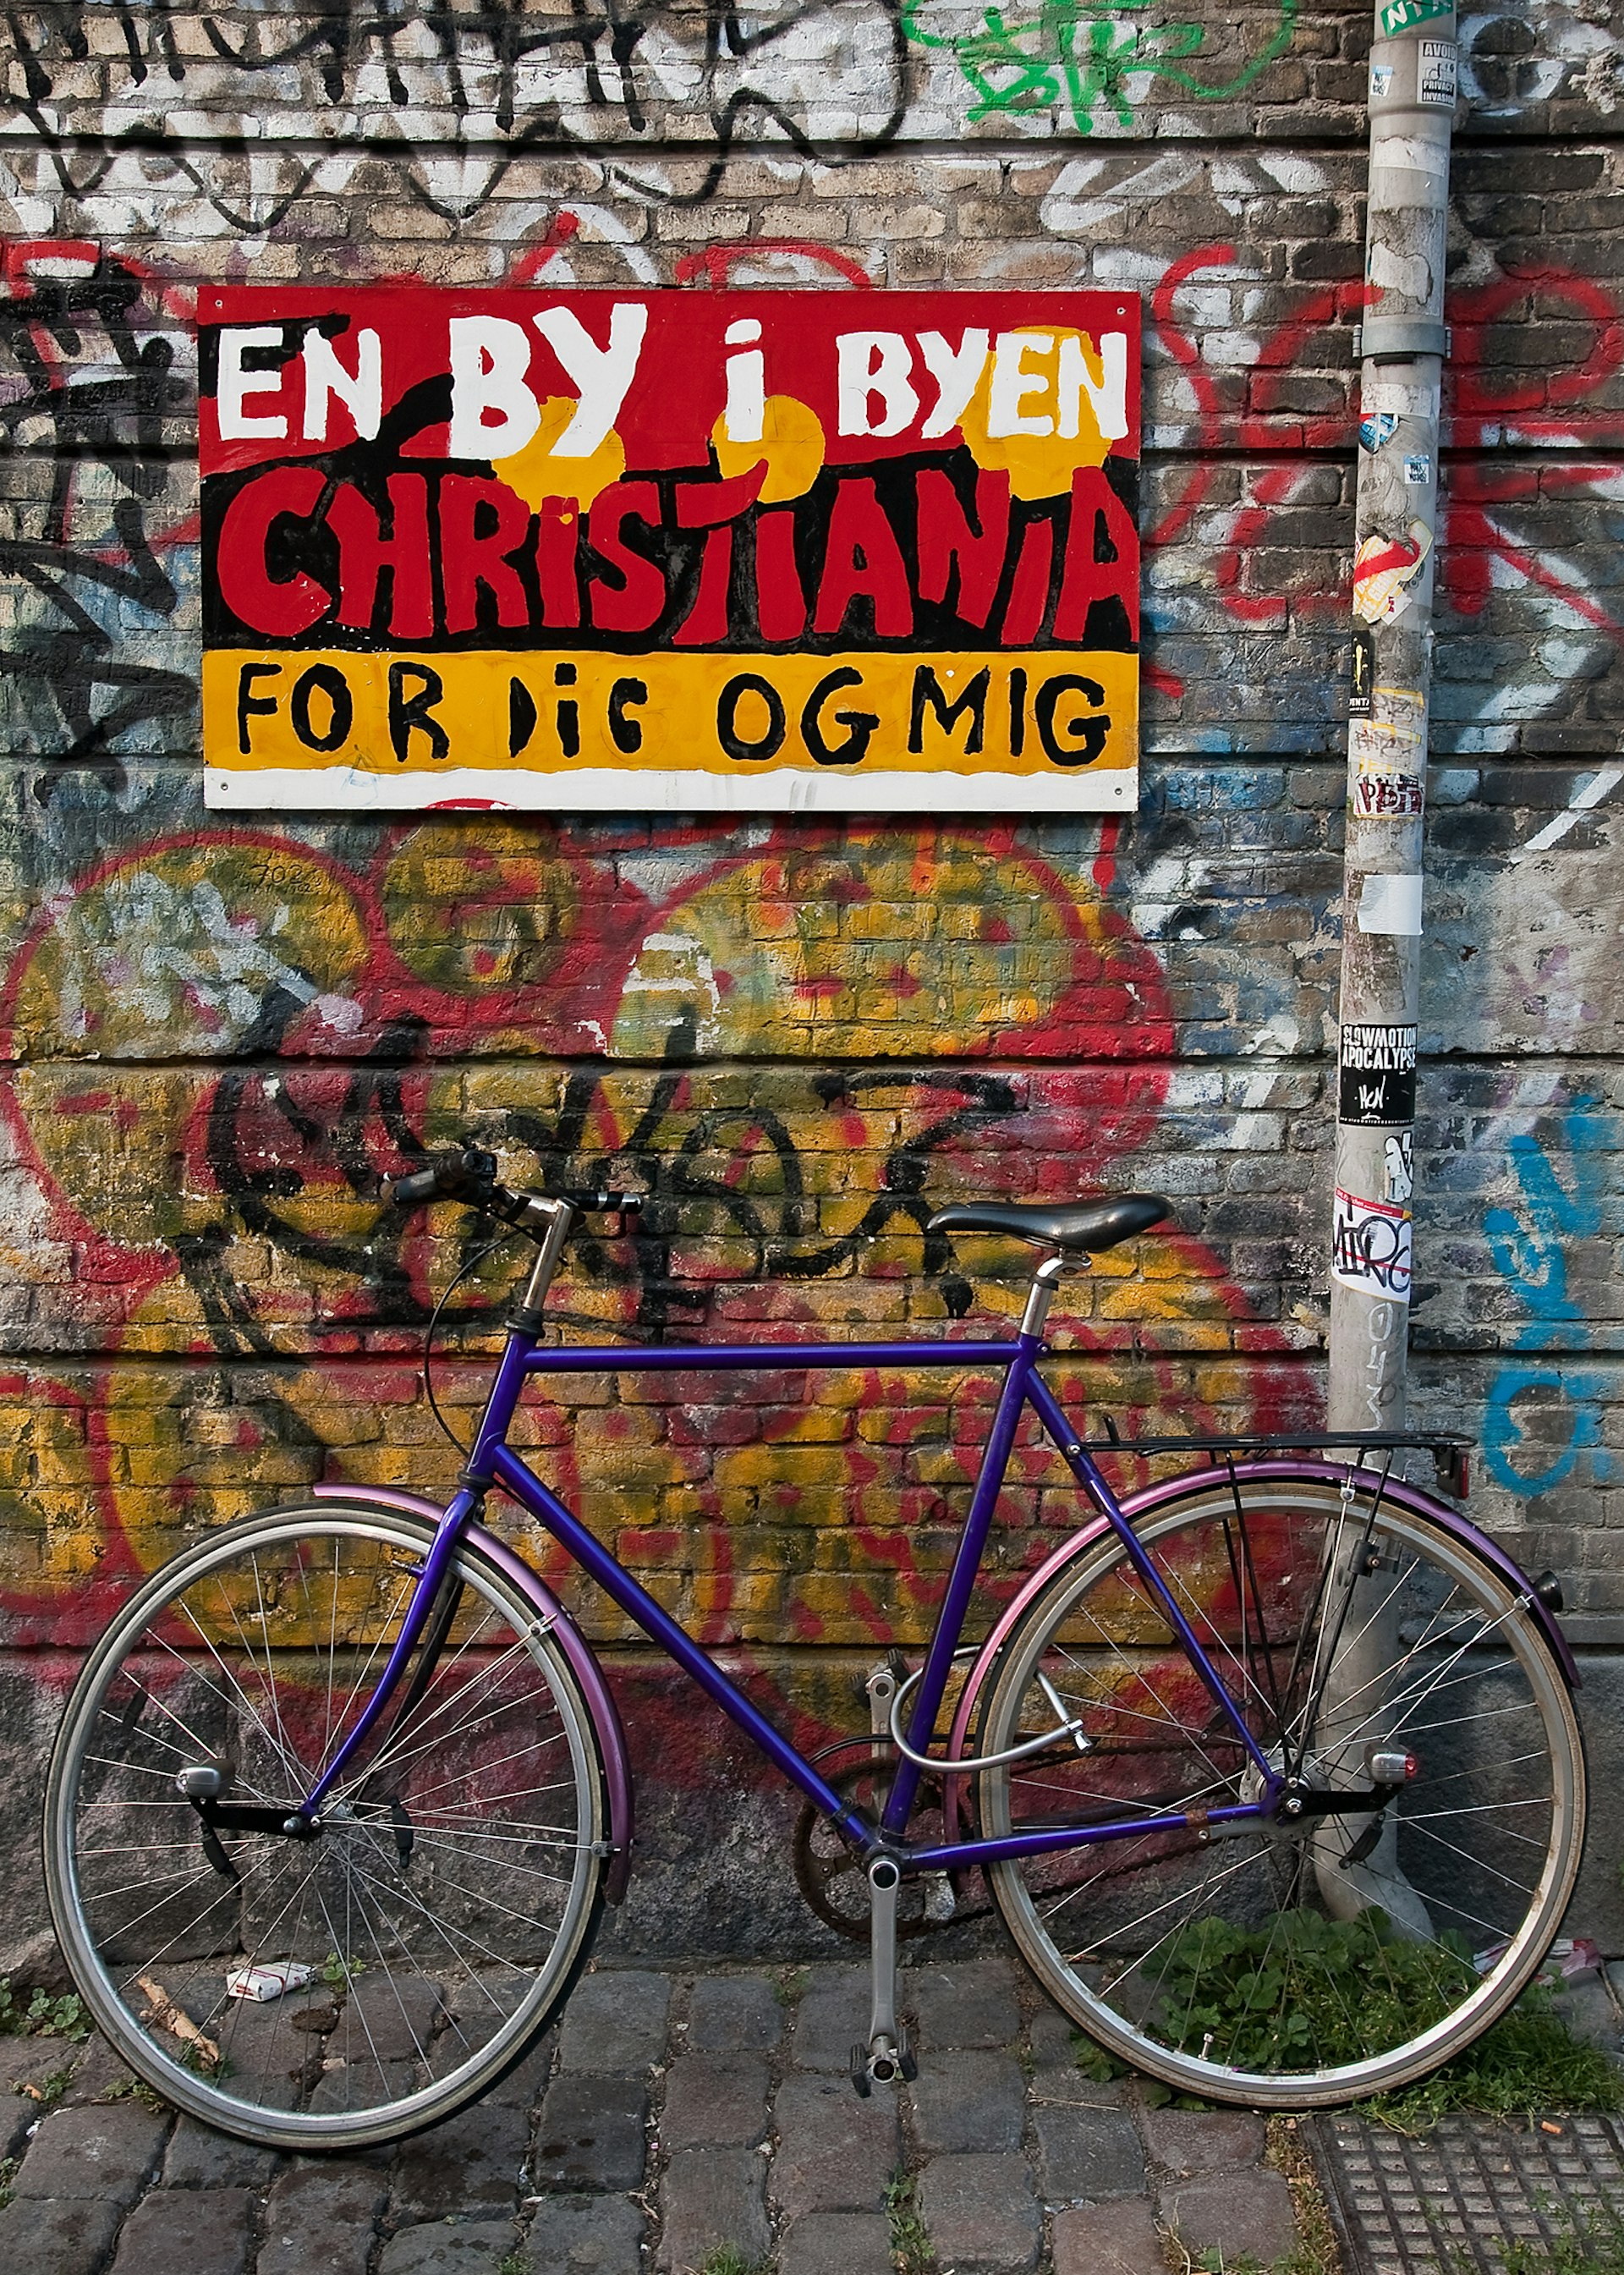 A bike leaning against a graffiti-covered wall in Christiania, Copenhagen, Denmark © Thomas La Mela / Shutterstock